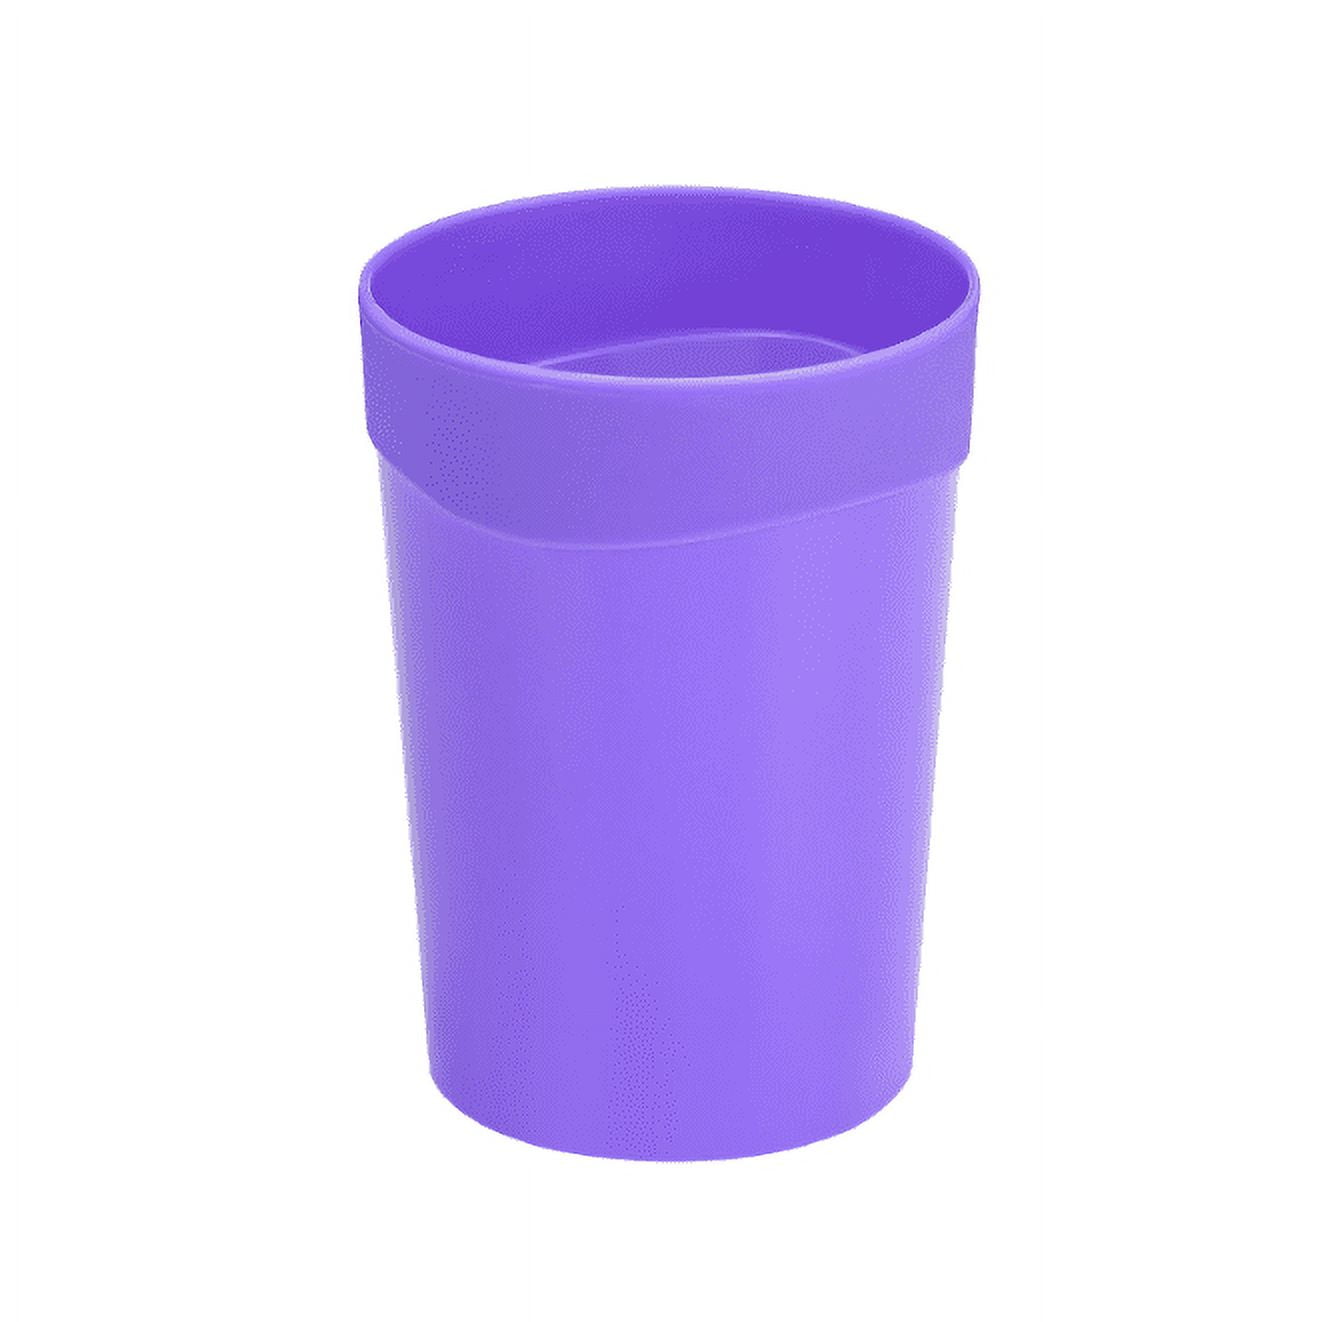 VANSINHO Large Plastic Cups Set of 12 BPA-Free Dishwasher Safe Colorful Unbreakable 35-ounce Mixed Drinkware Tumbler